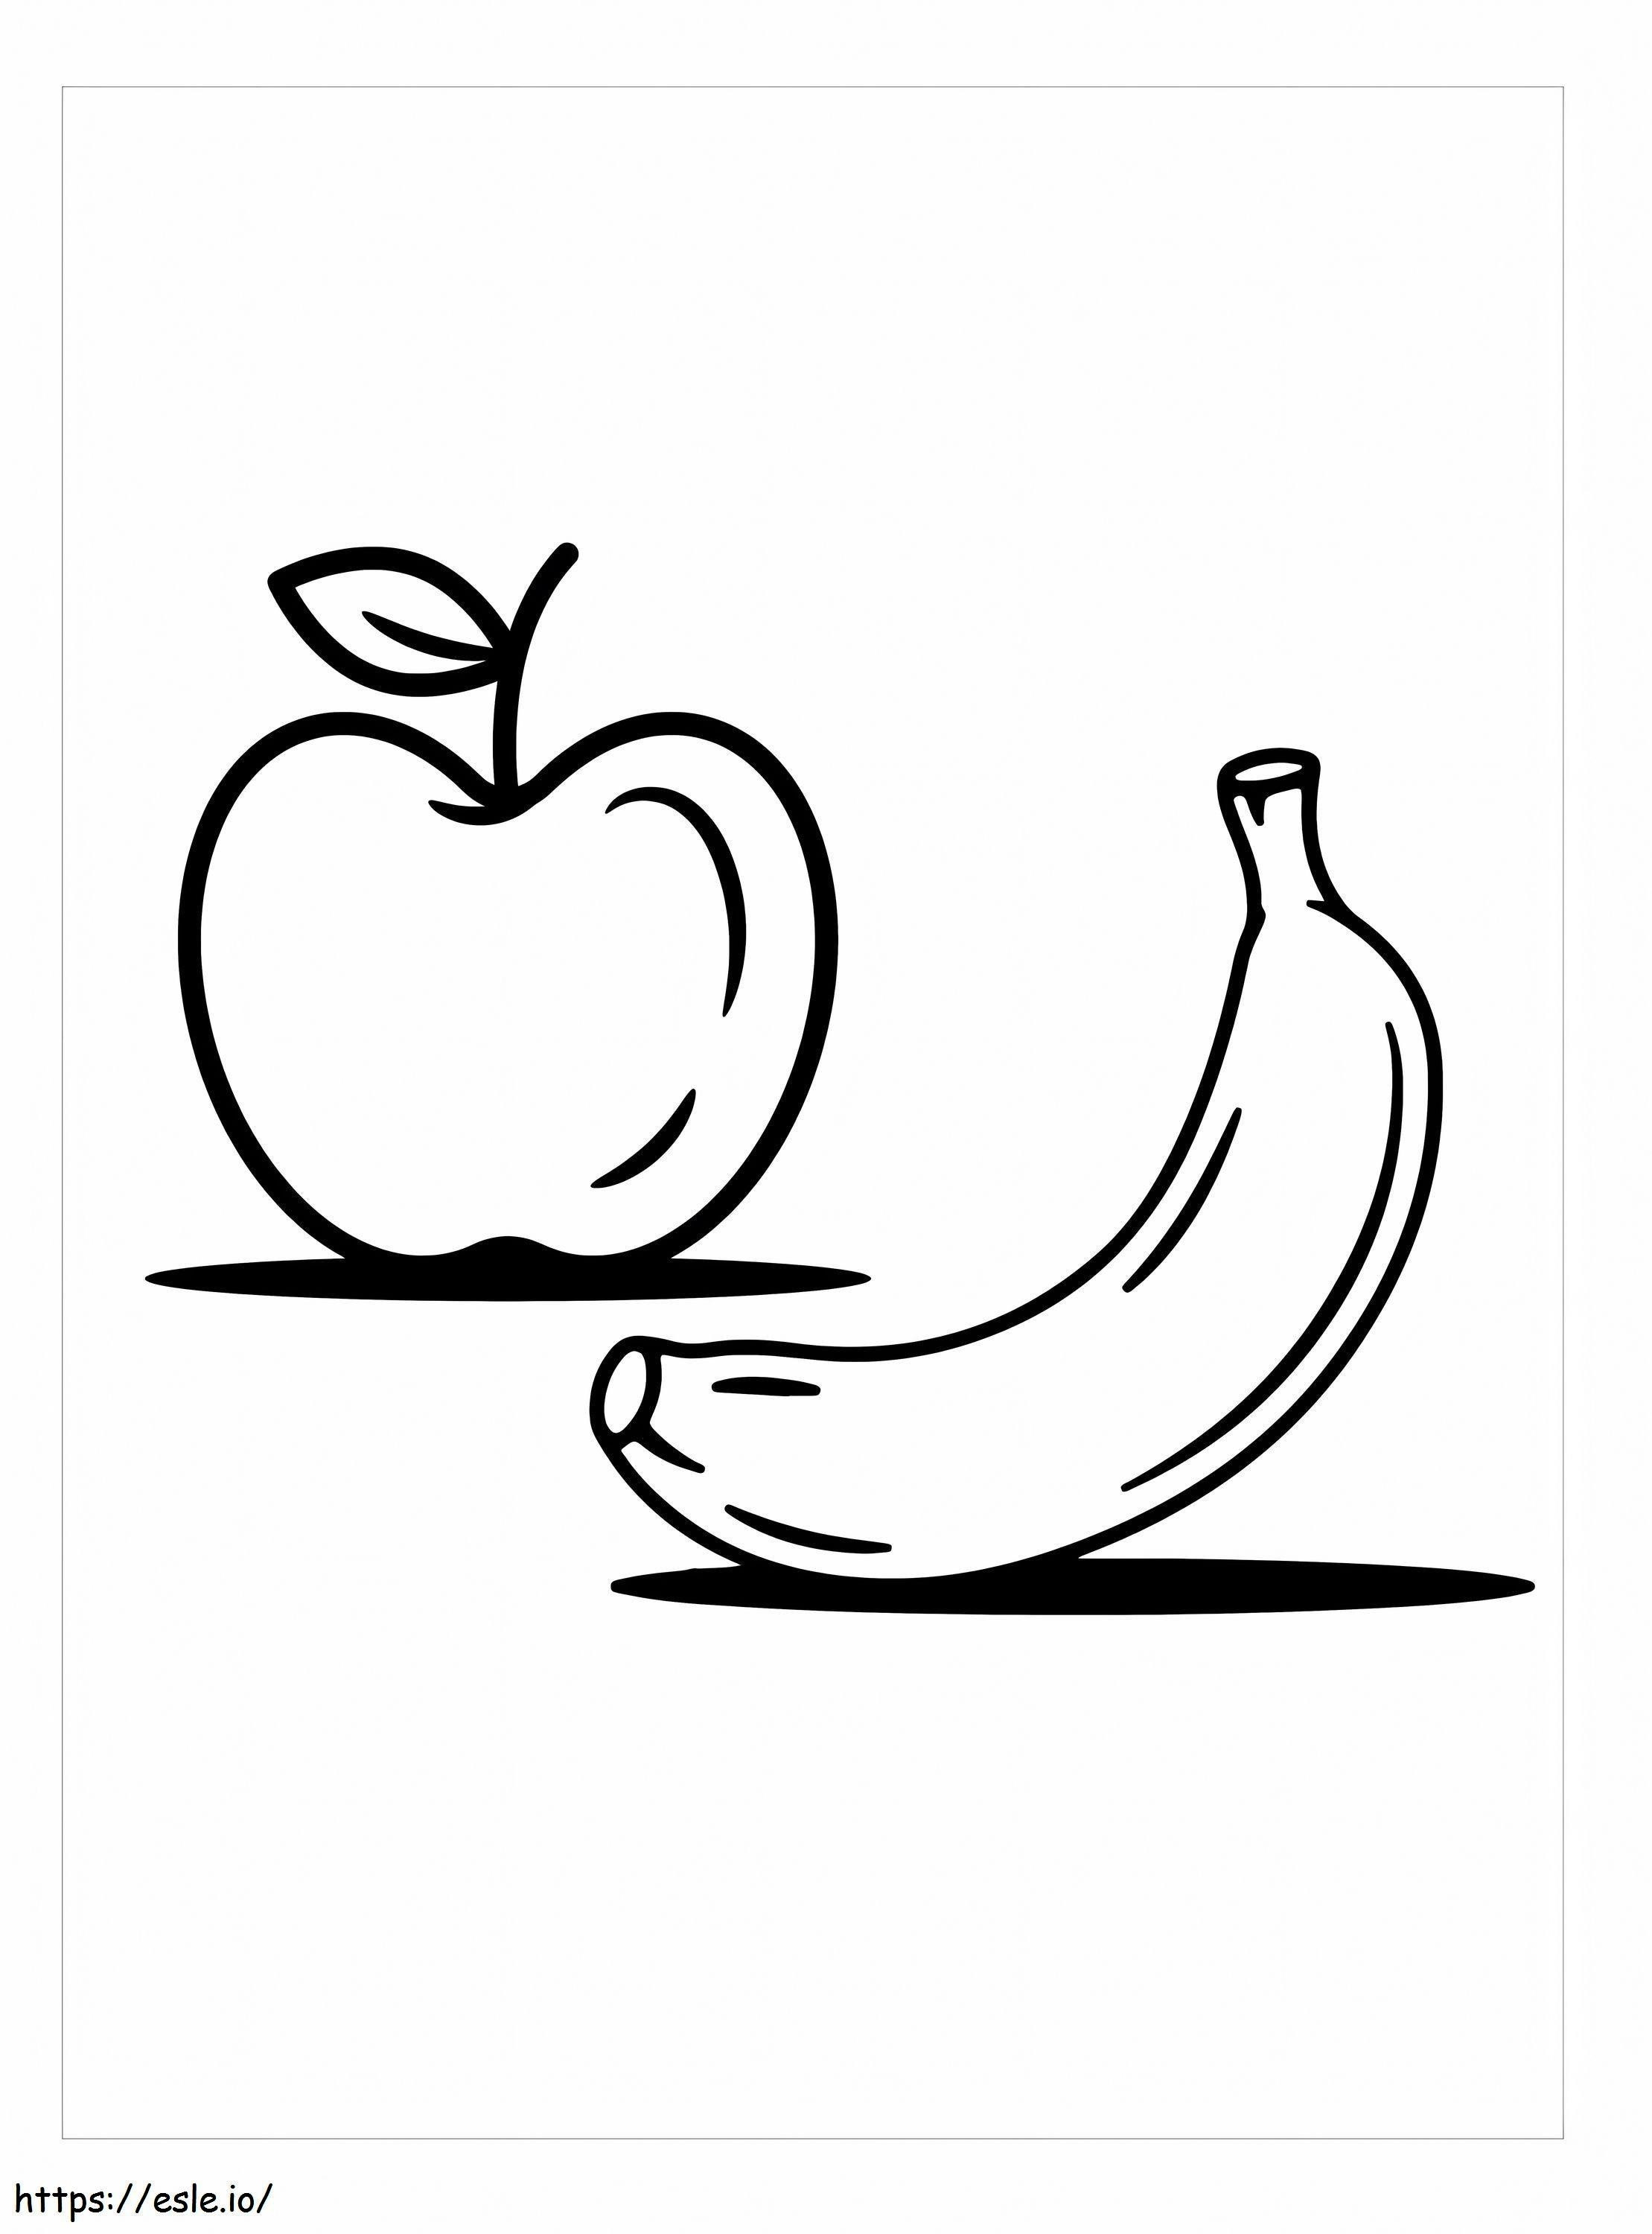 Apple And Banana coloring page